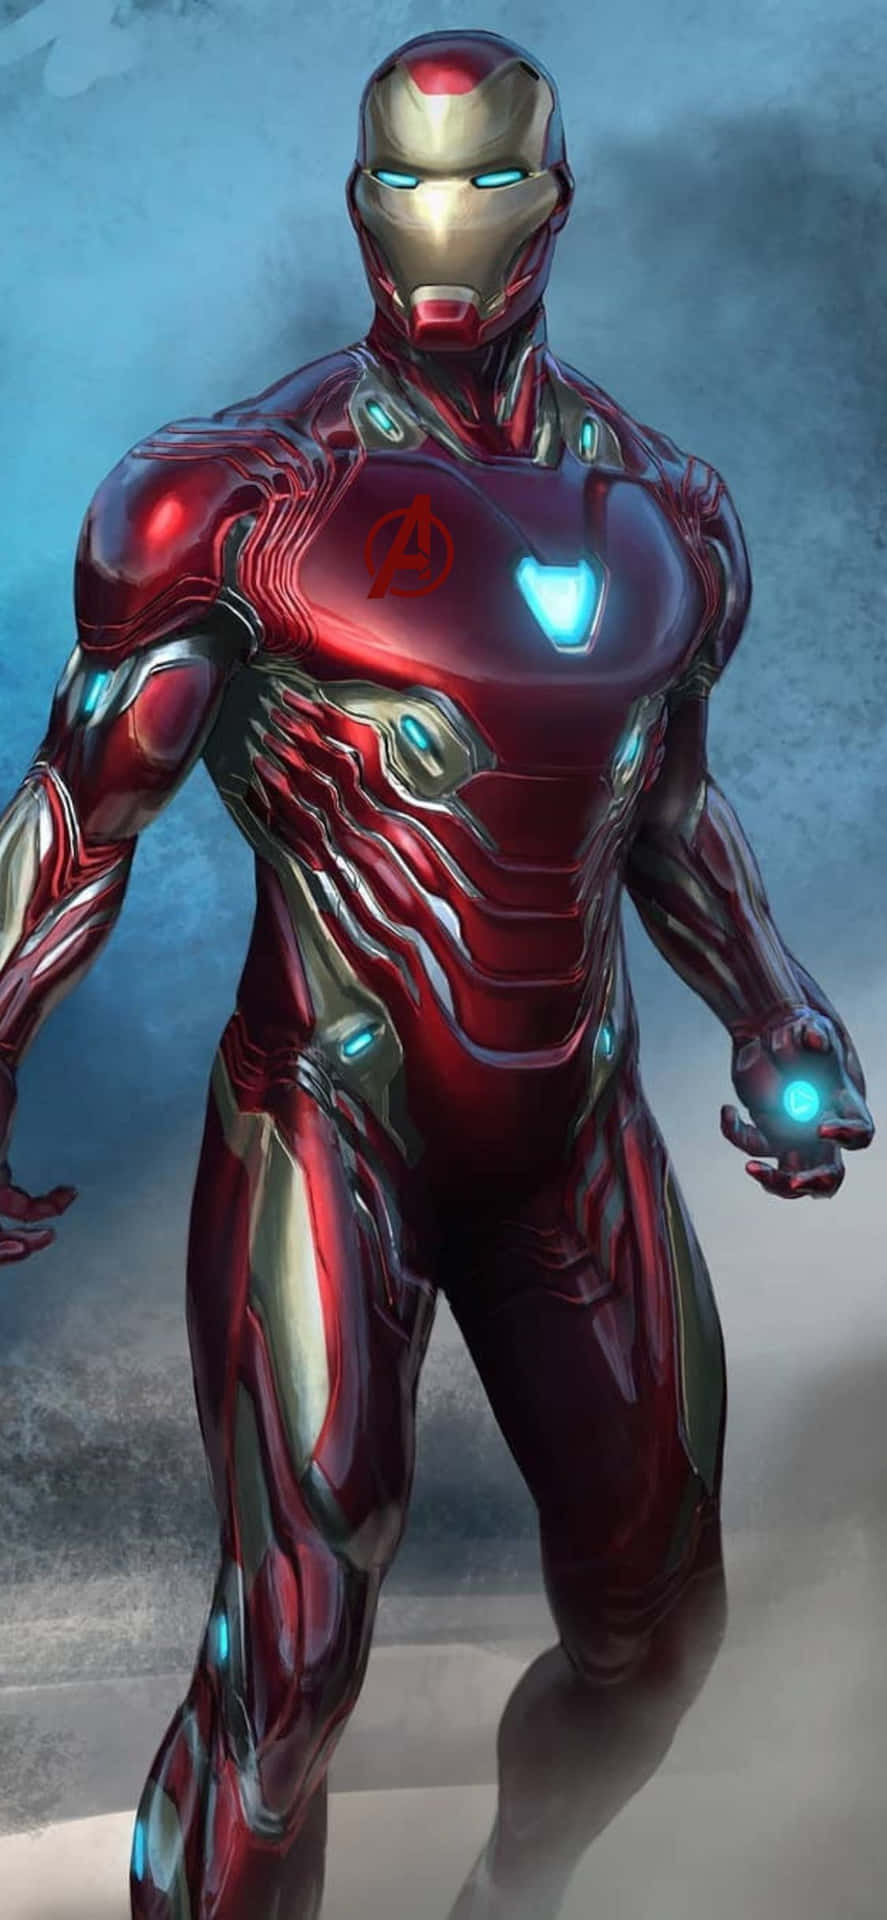 Iphonexs Avengers Hintergrund Iron Man Im Mark 50 Anzug